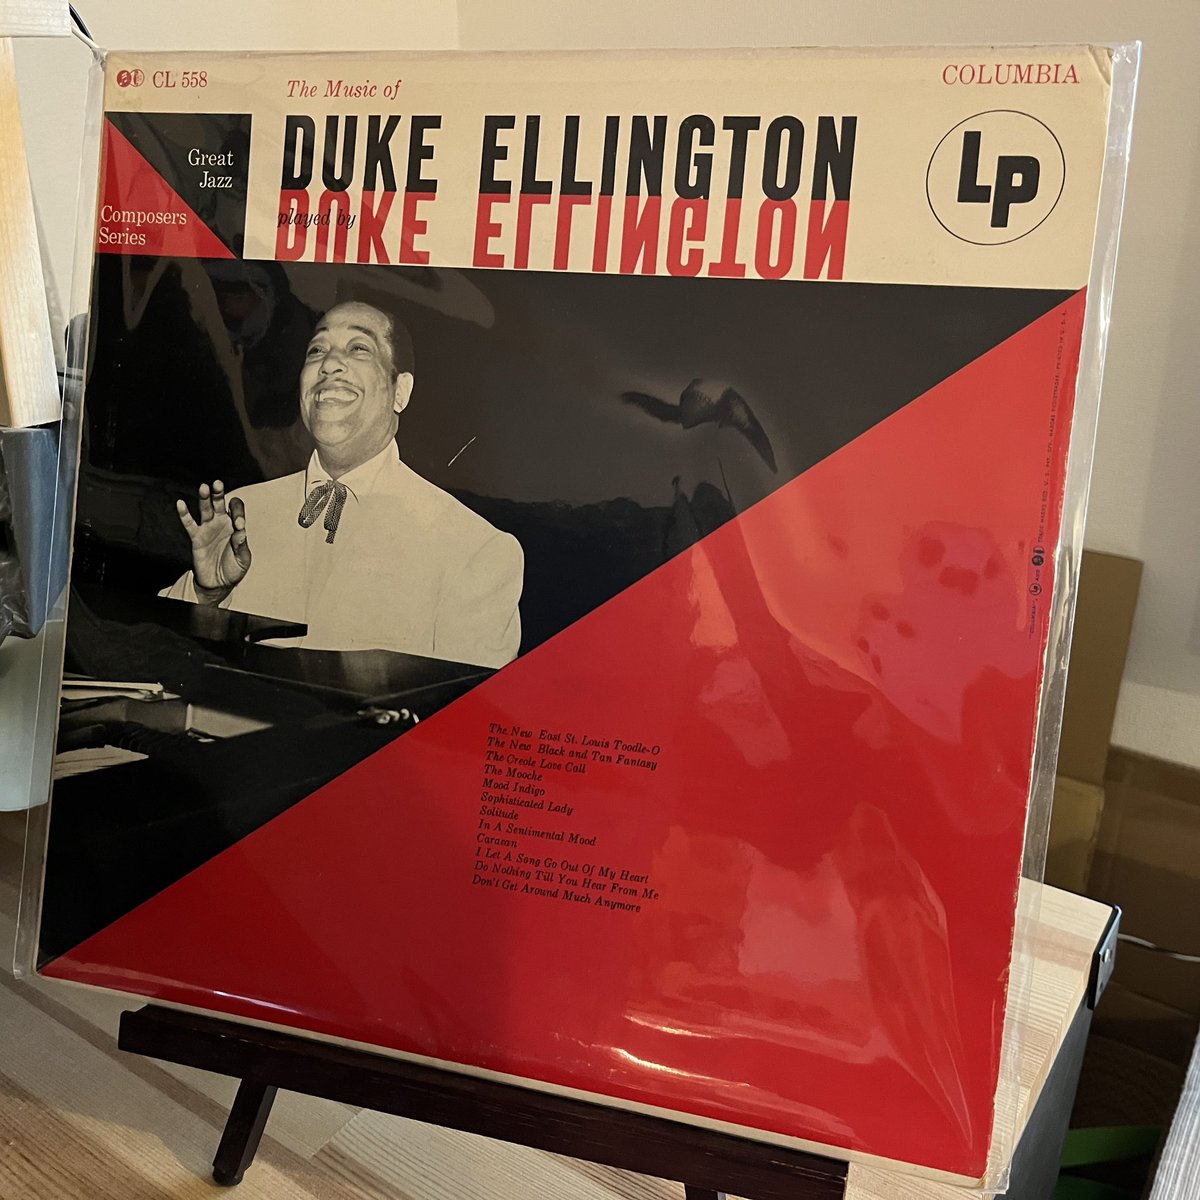 #NowPlaying #jazz
DUKE ELLINGTON

何度聴いても素晴らしい、エリントン名盤◎